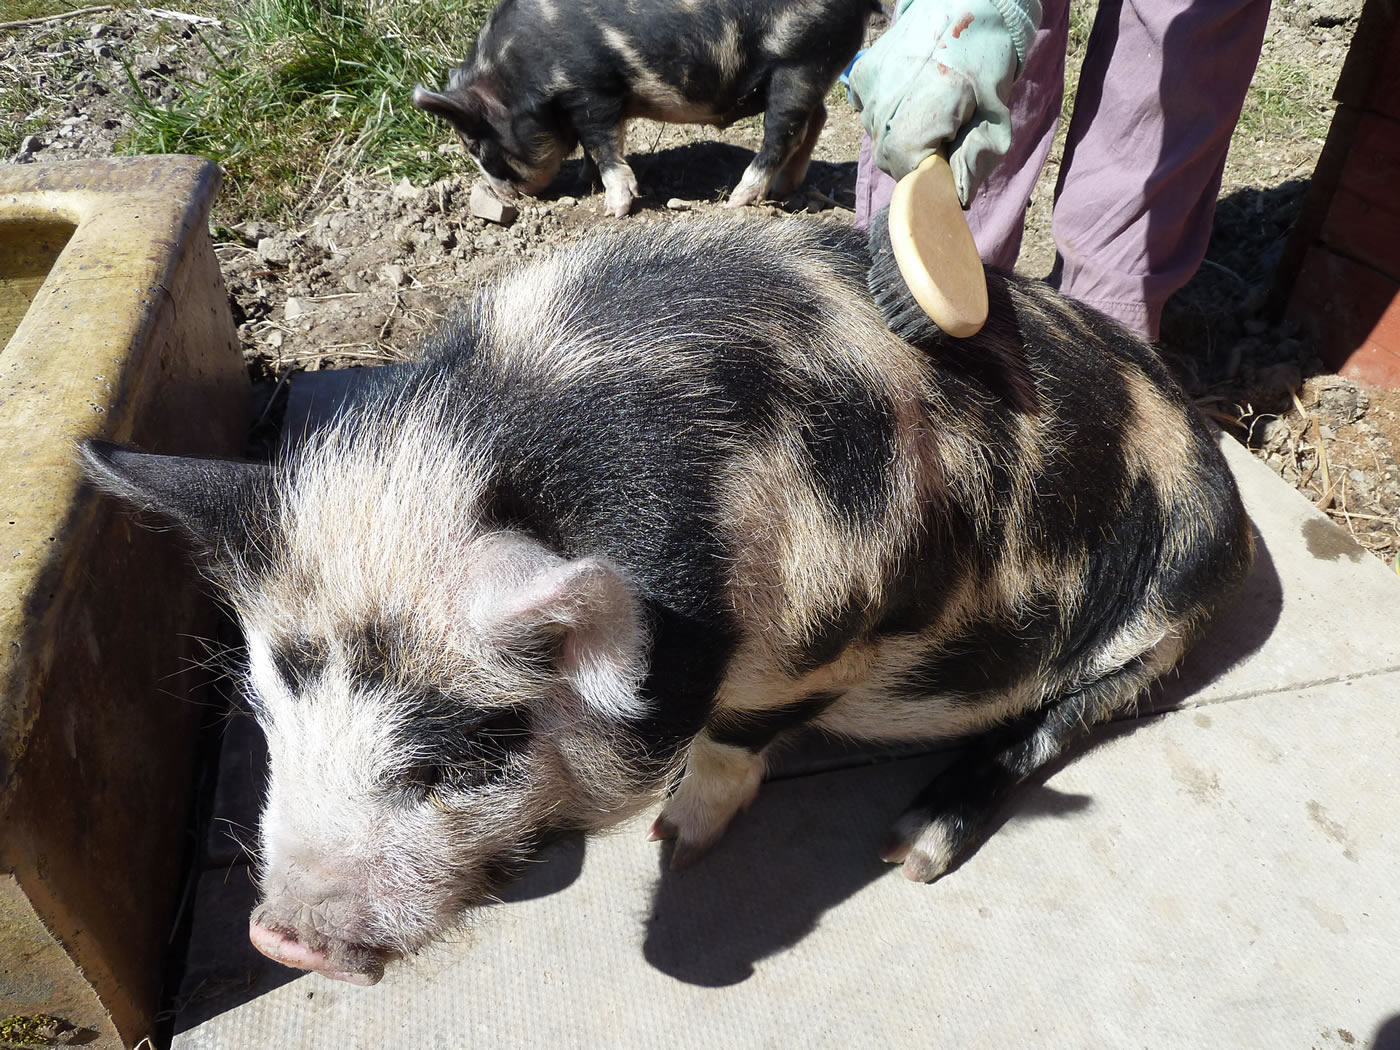 Our pet kunekune pig, getting brushed.